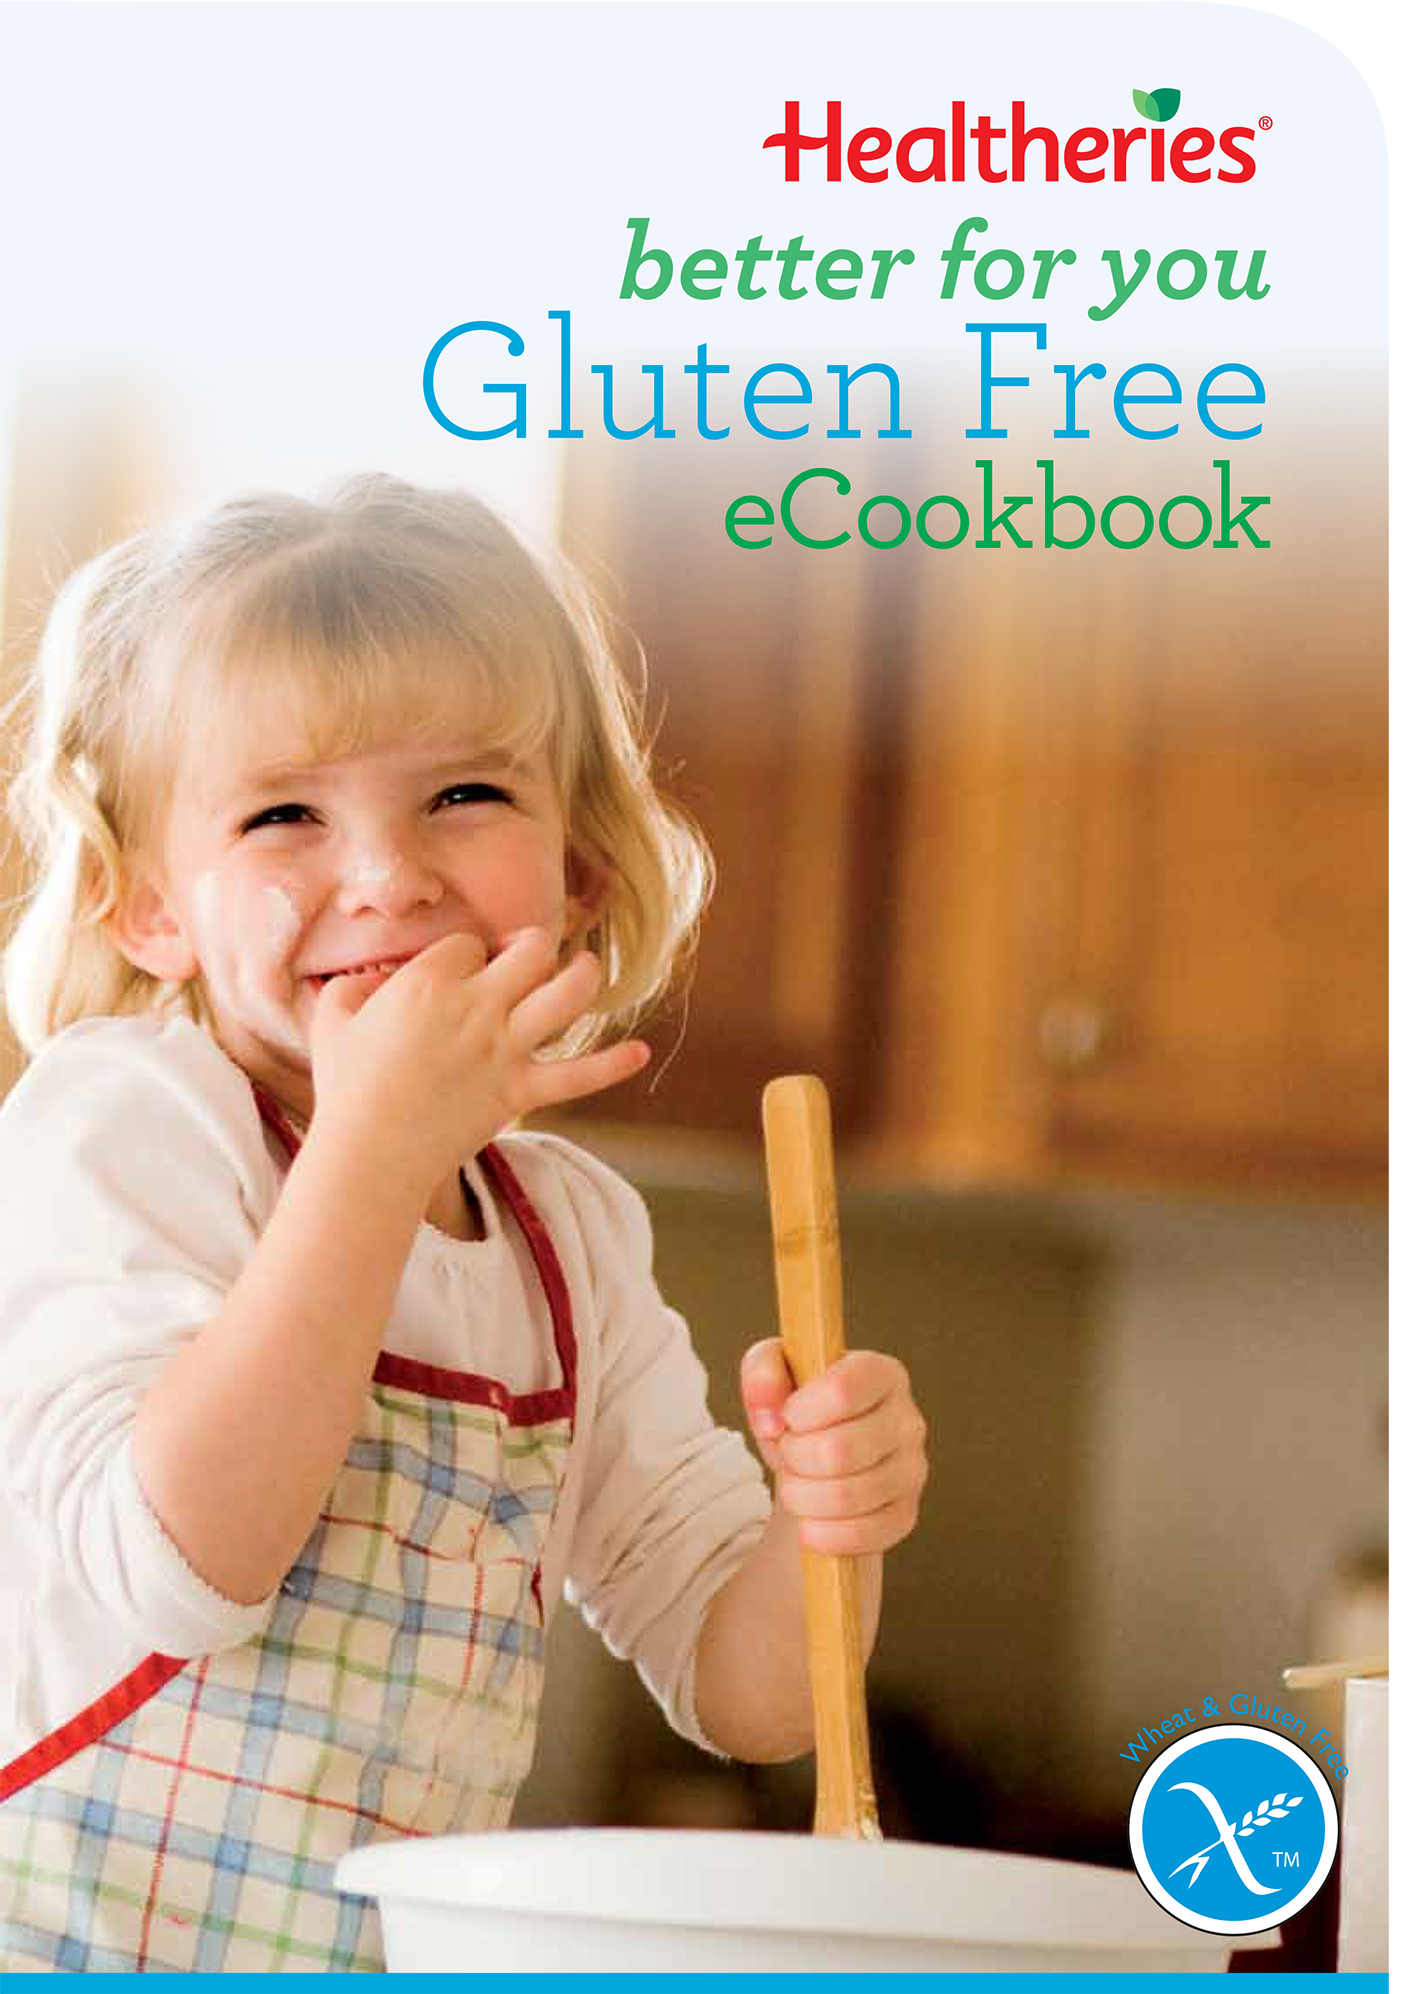 Healtheries Gluten-Free Cookbook